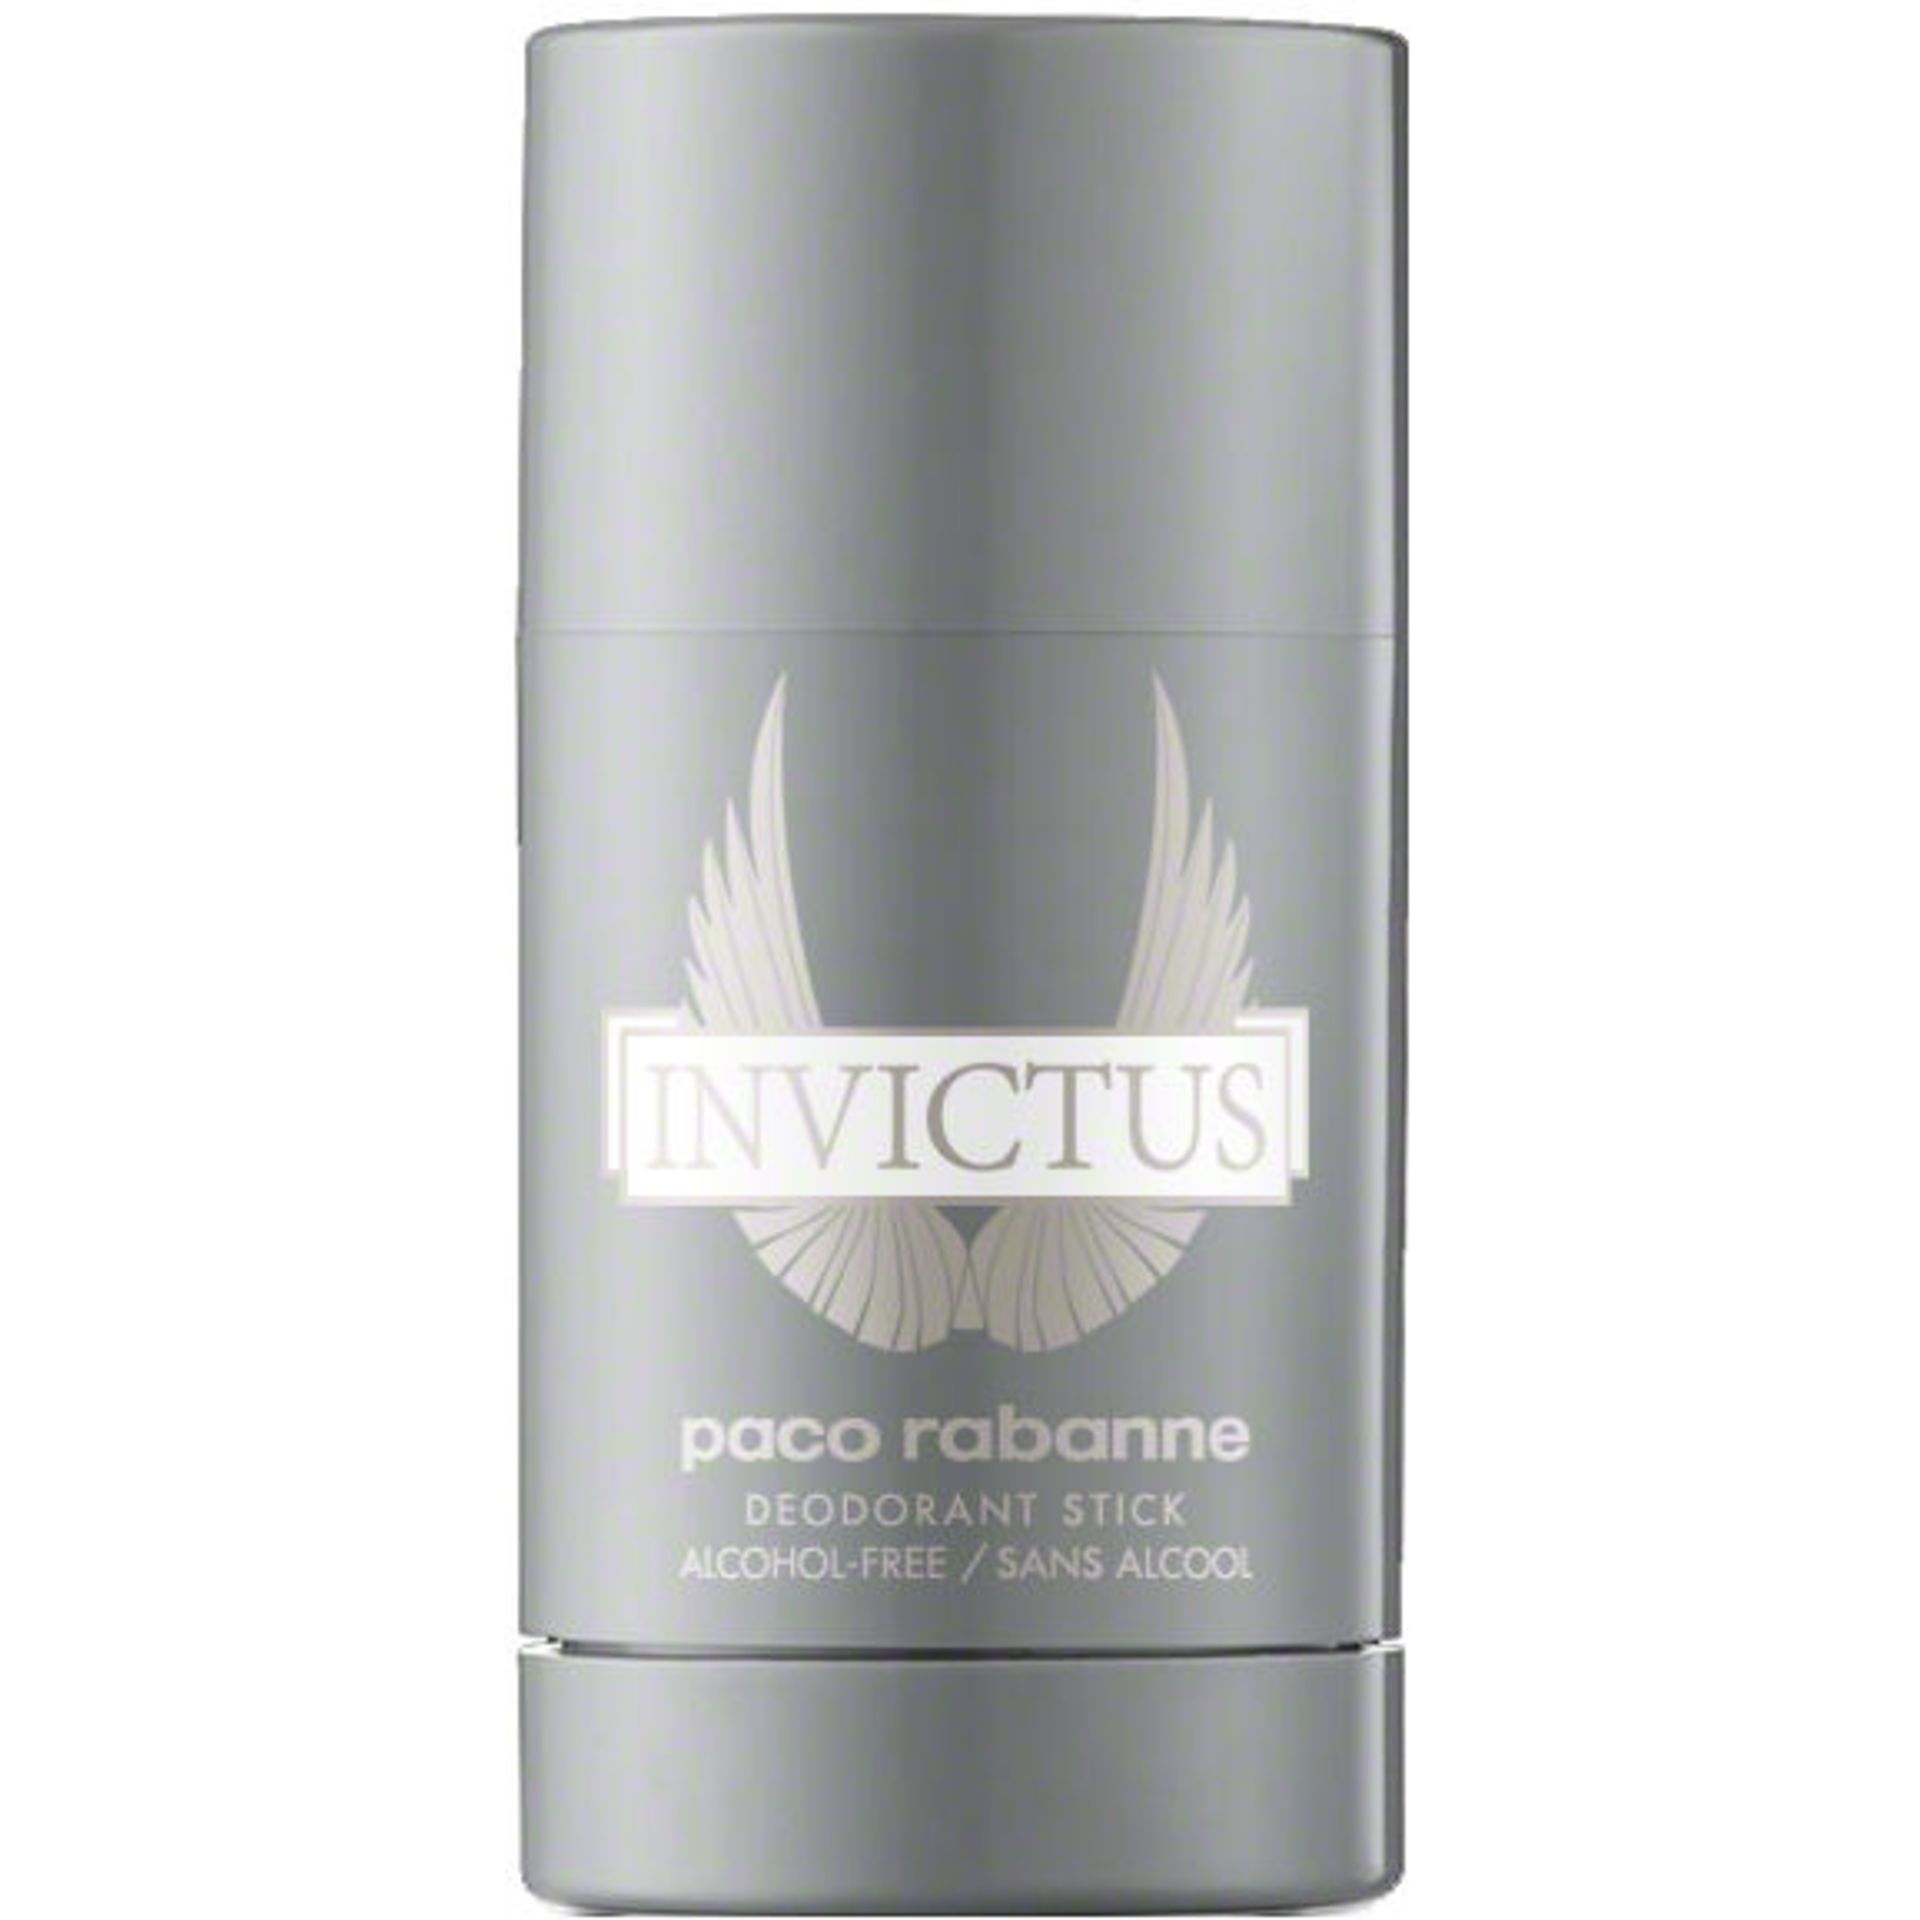 V Brand New Paco Rabanne Invictus 75g Deodorant Stick